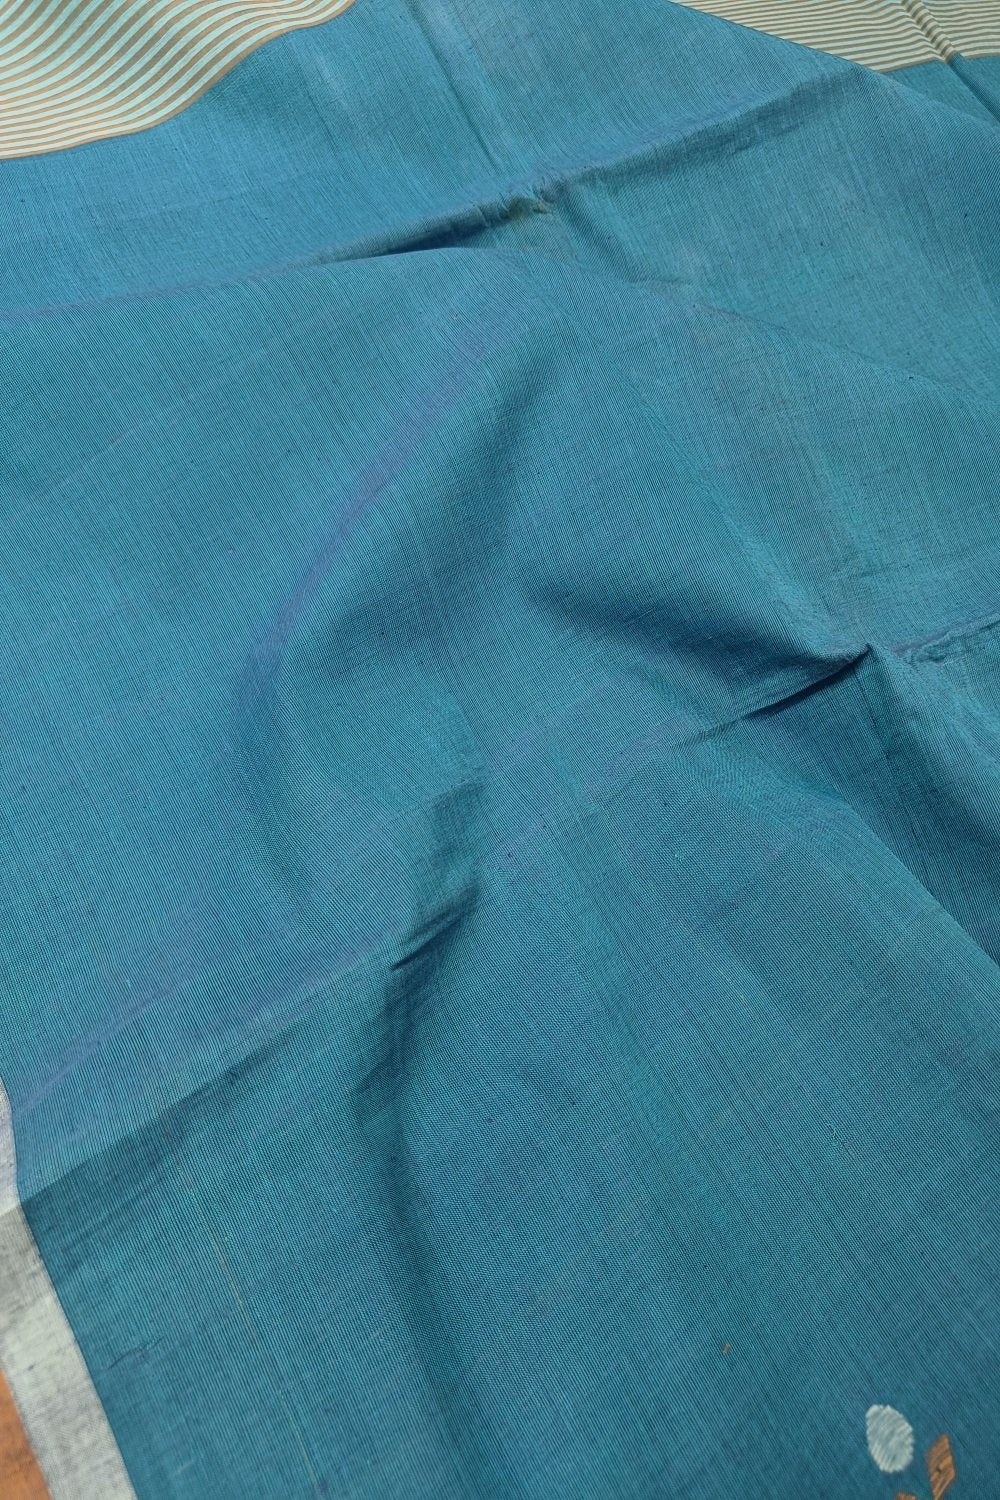 Handwoven Cotton sarees - Matkatus